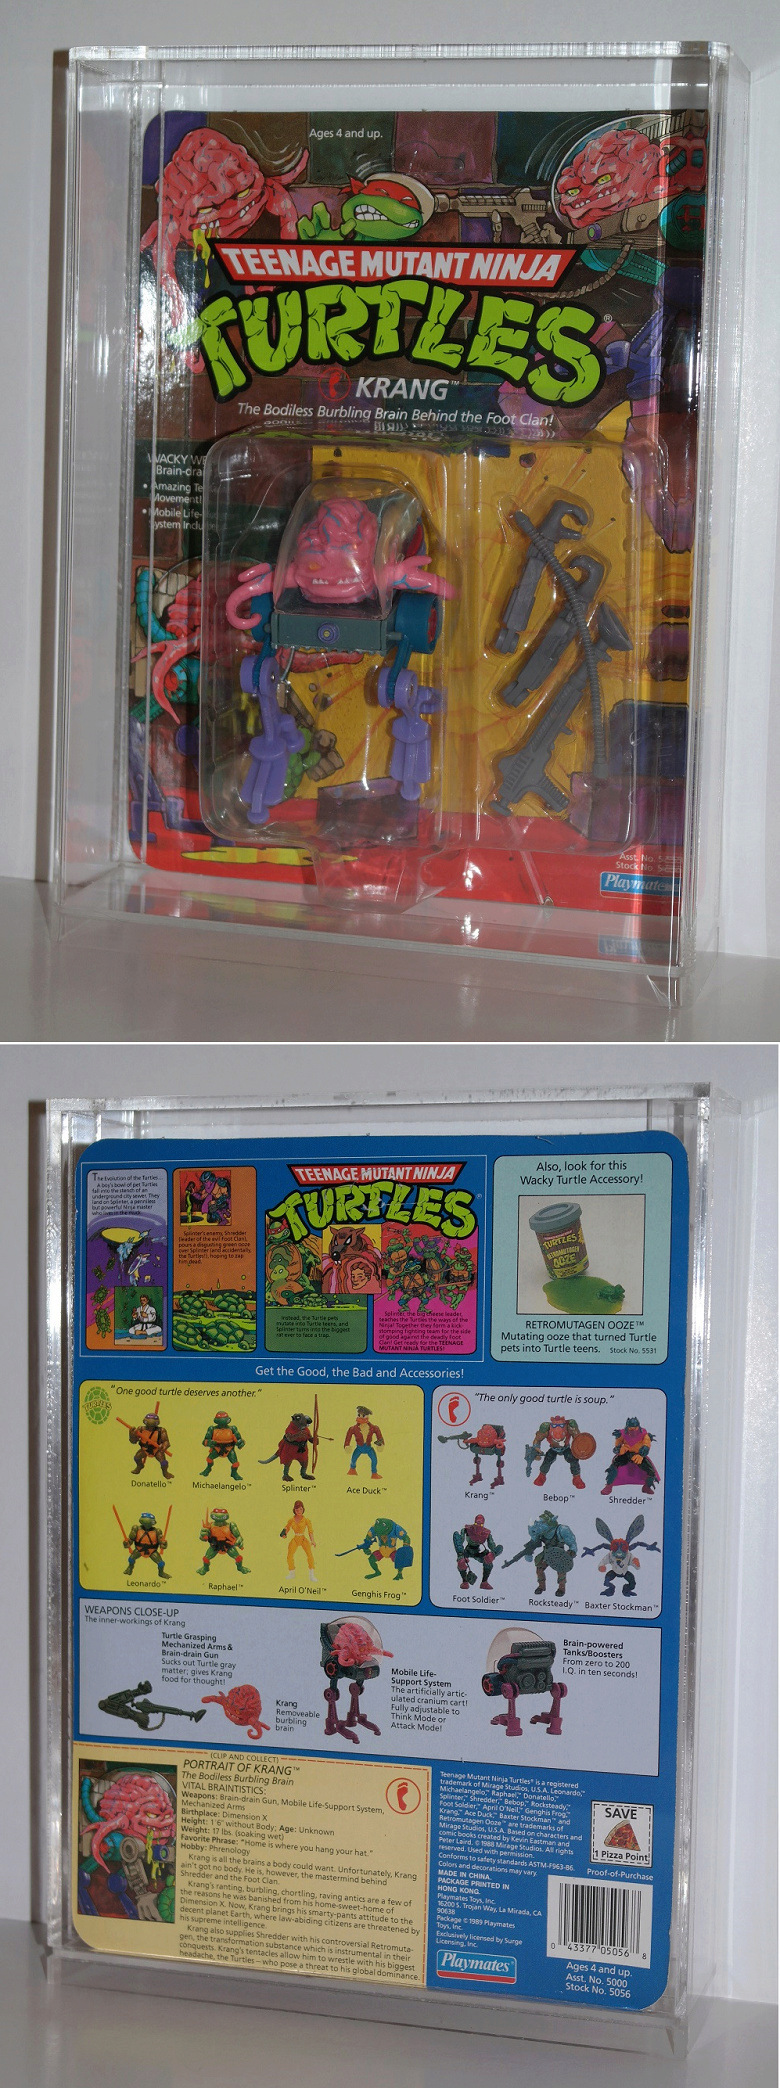 Les Tortues Ninja - Gamme Playmates Bandaï 1988 - 1998 - Page 2 Bliste28